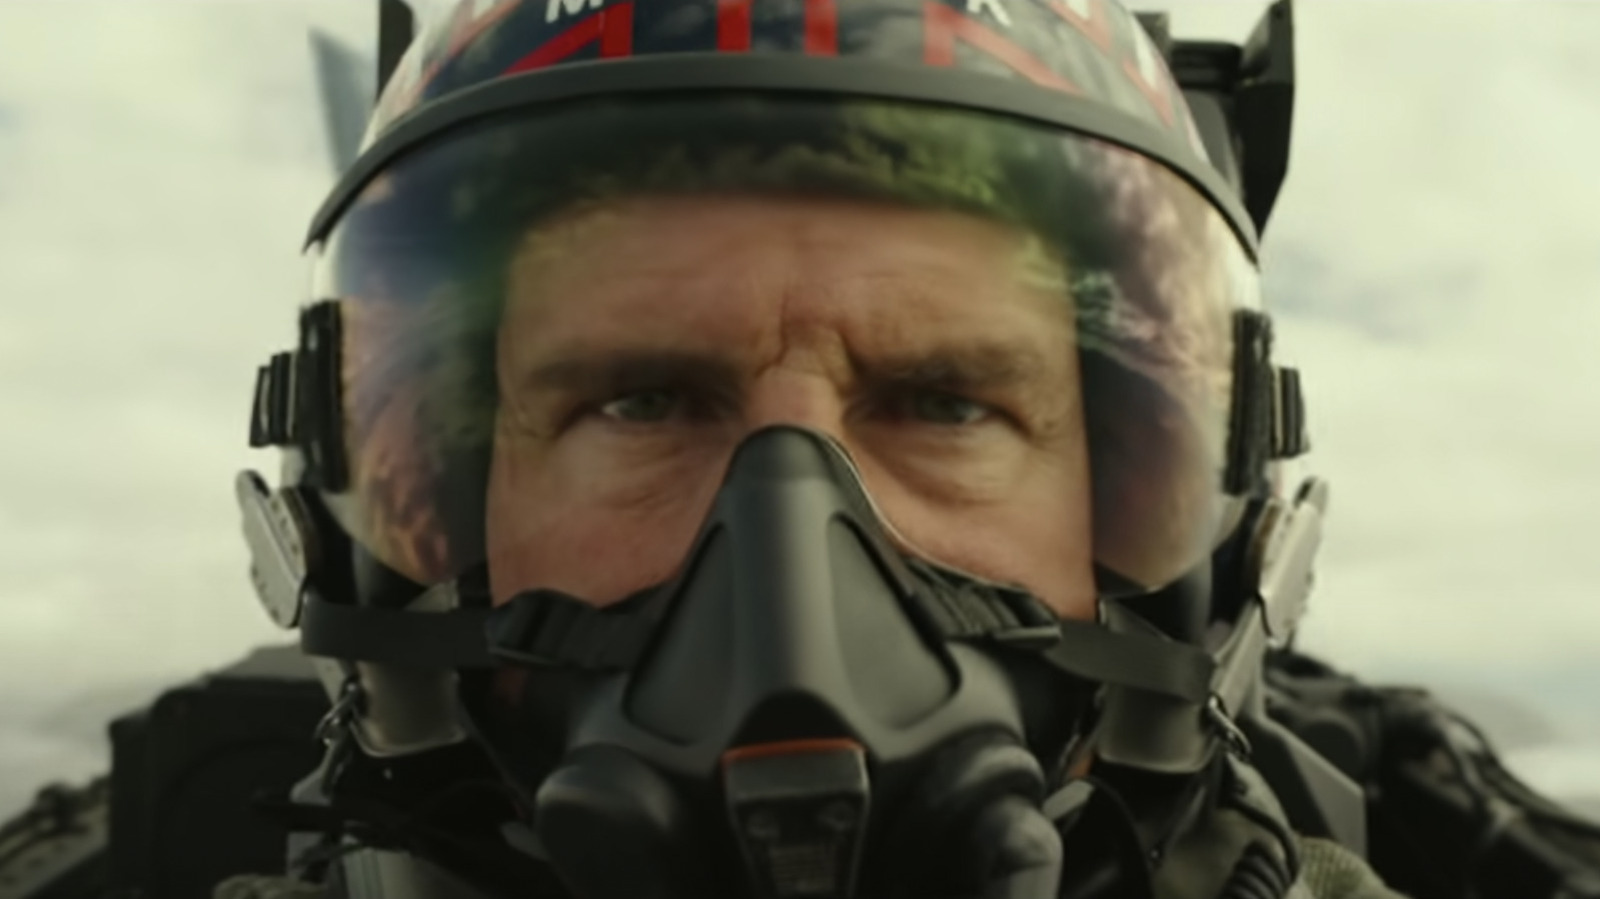 Top Gun Mavericks Climactic Scene Owes A Major Debt To Star Wars